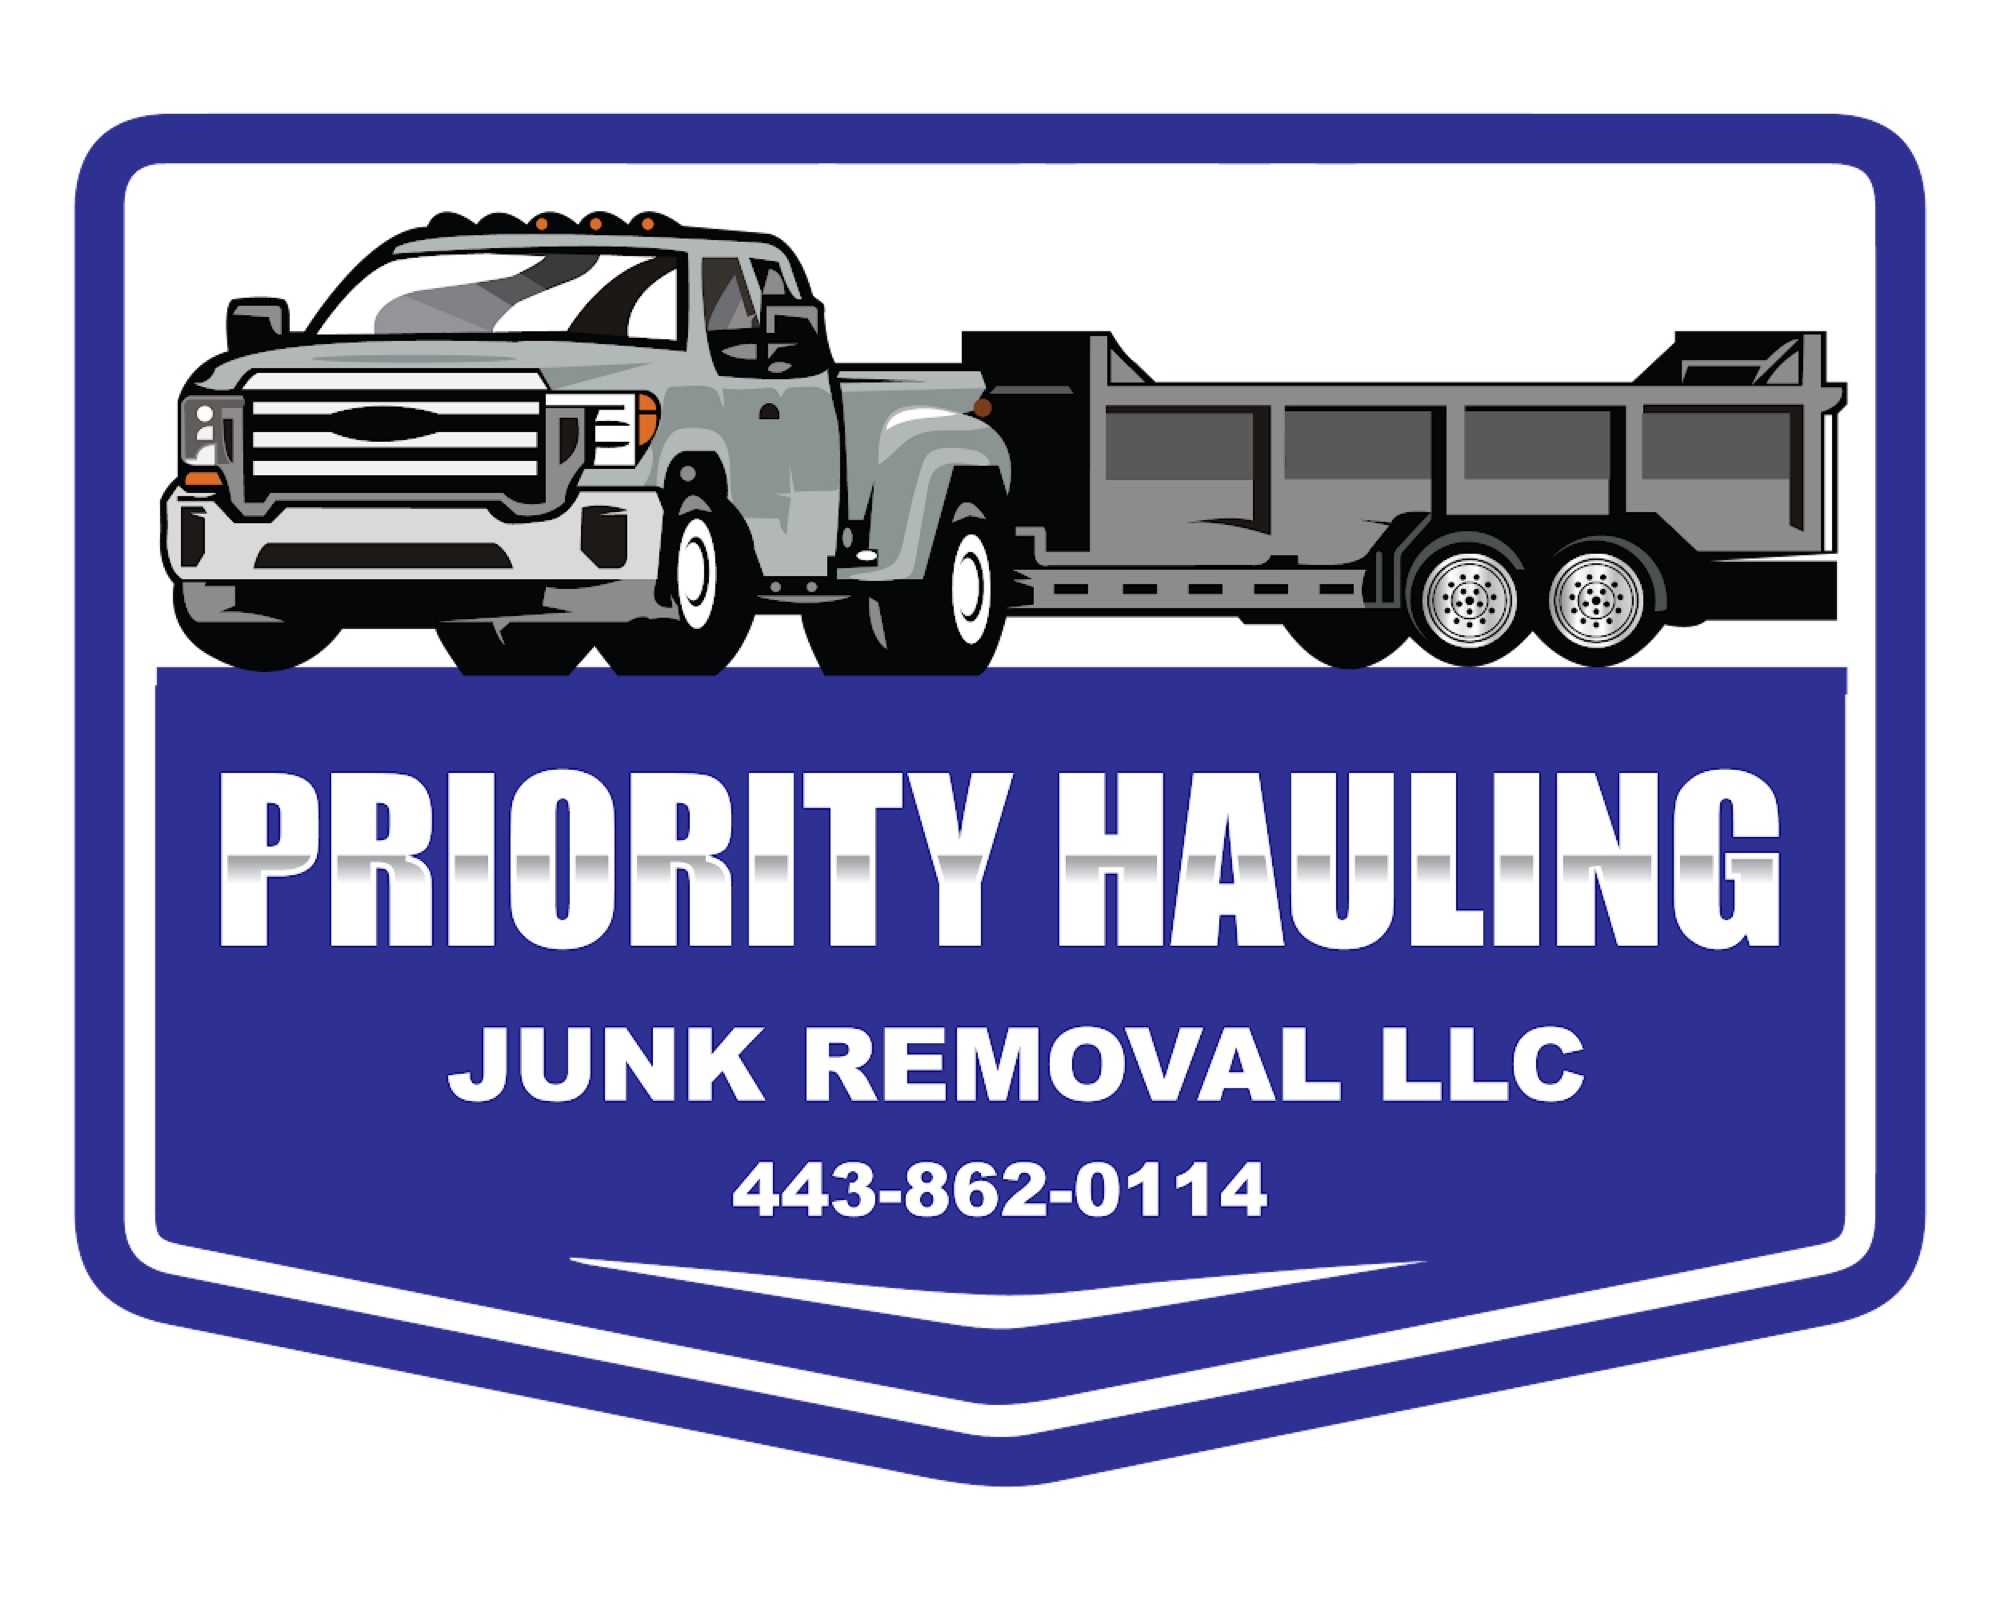 Priority Hauling Junk Removal, LLC Logo